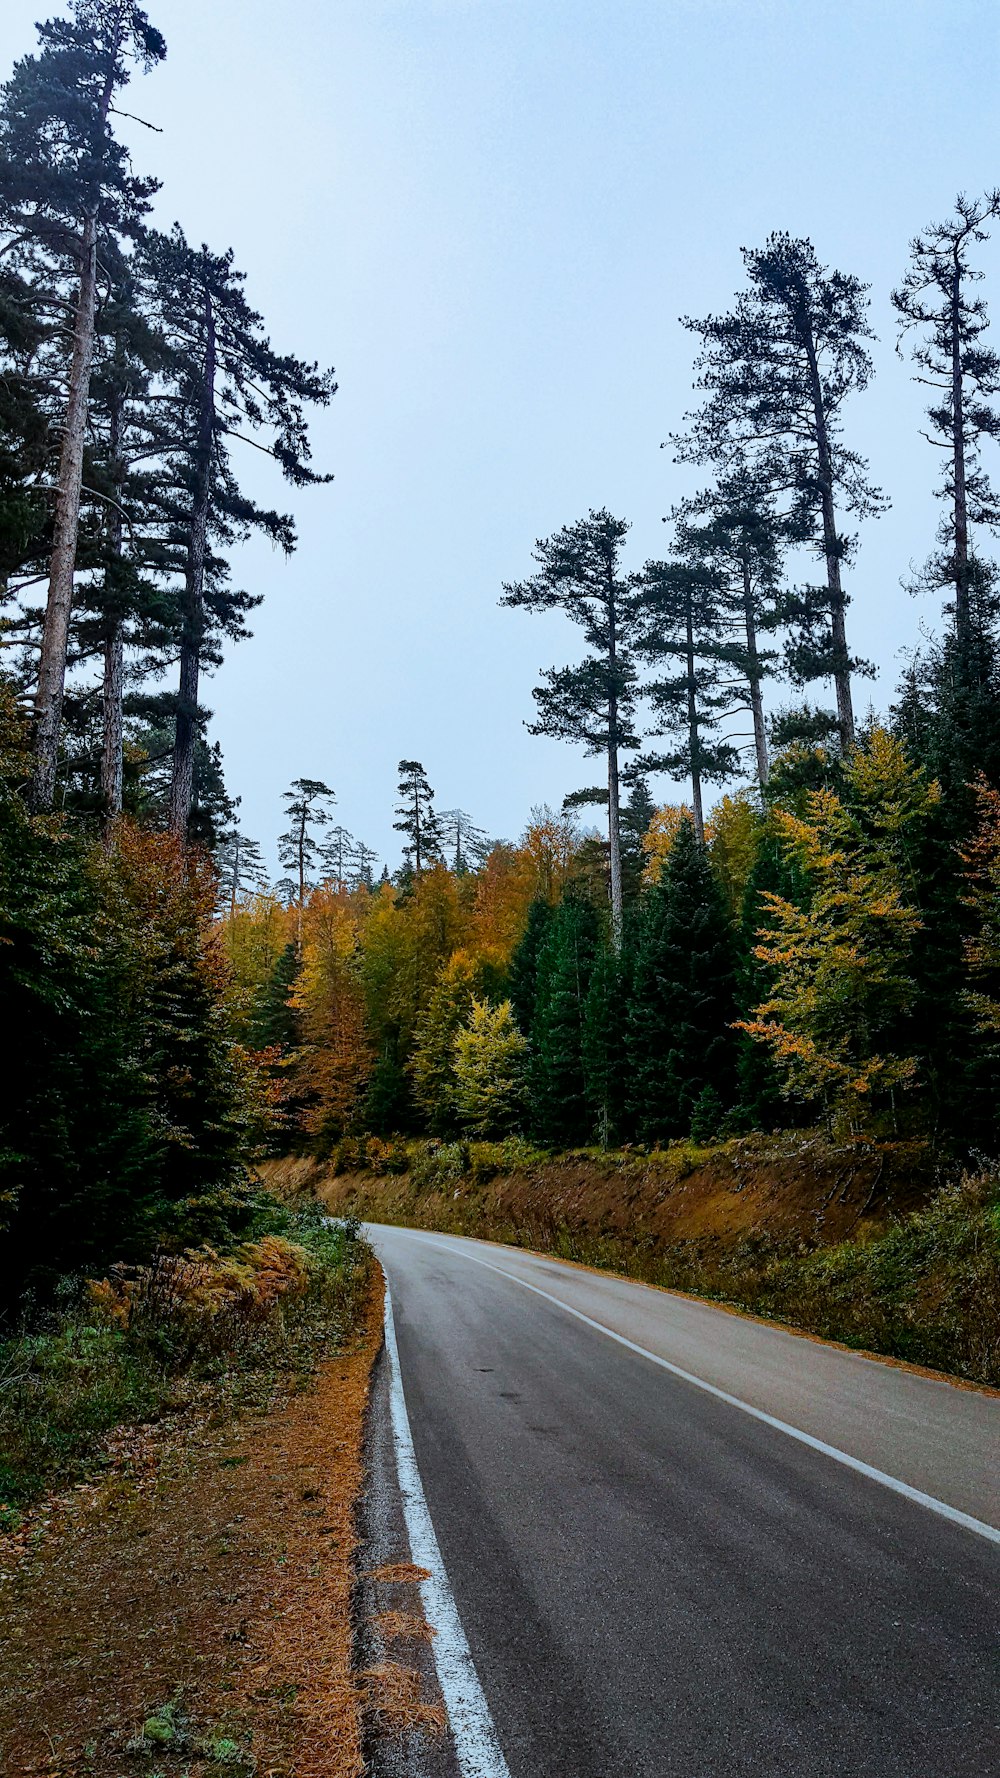 gray asphalt road between green trees during daytime